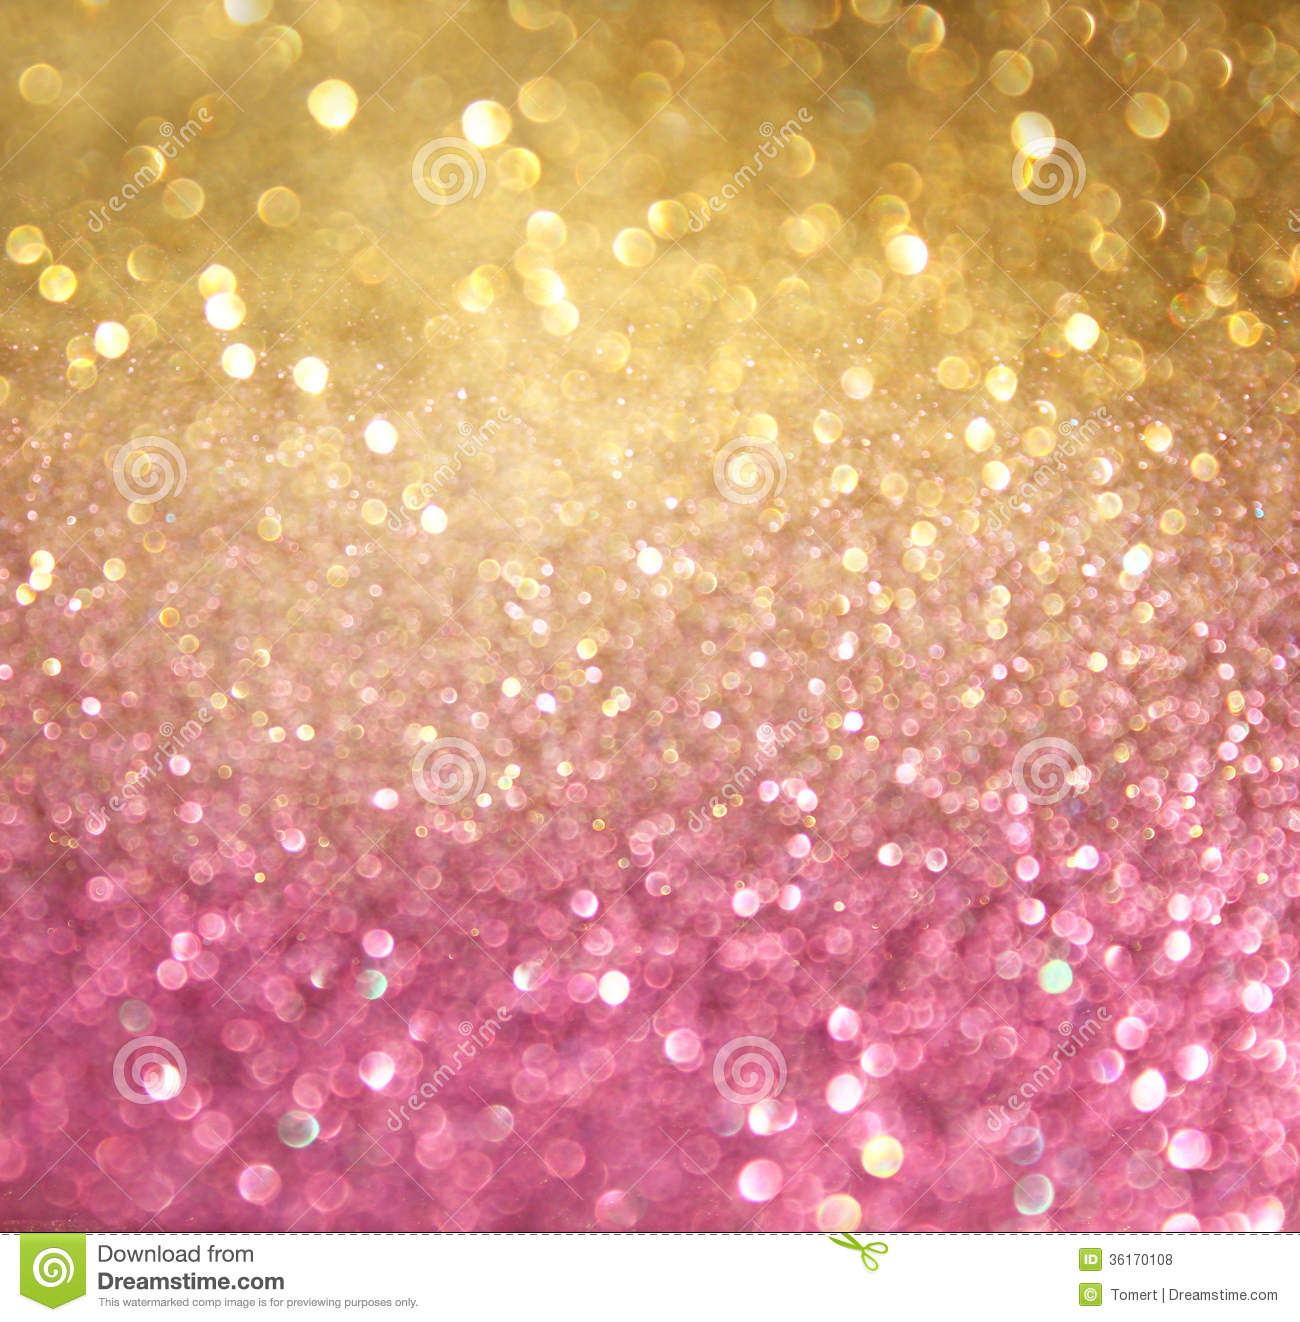 Pink and Gold Desktop Wallpaper